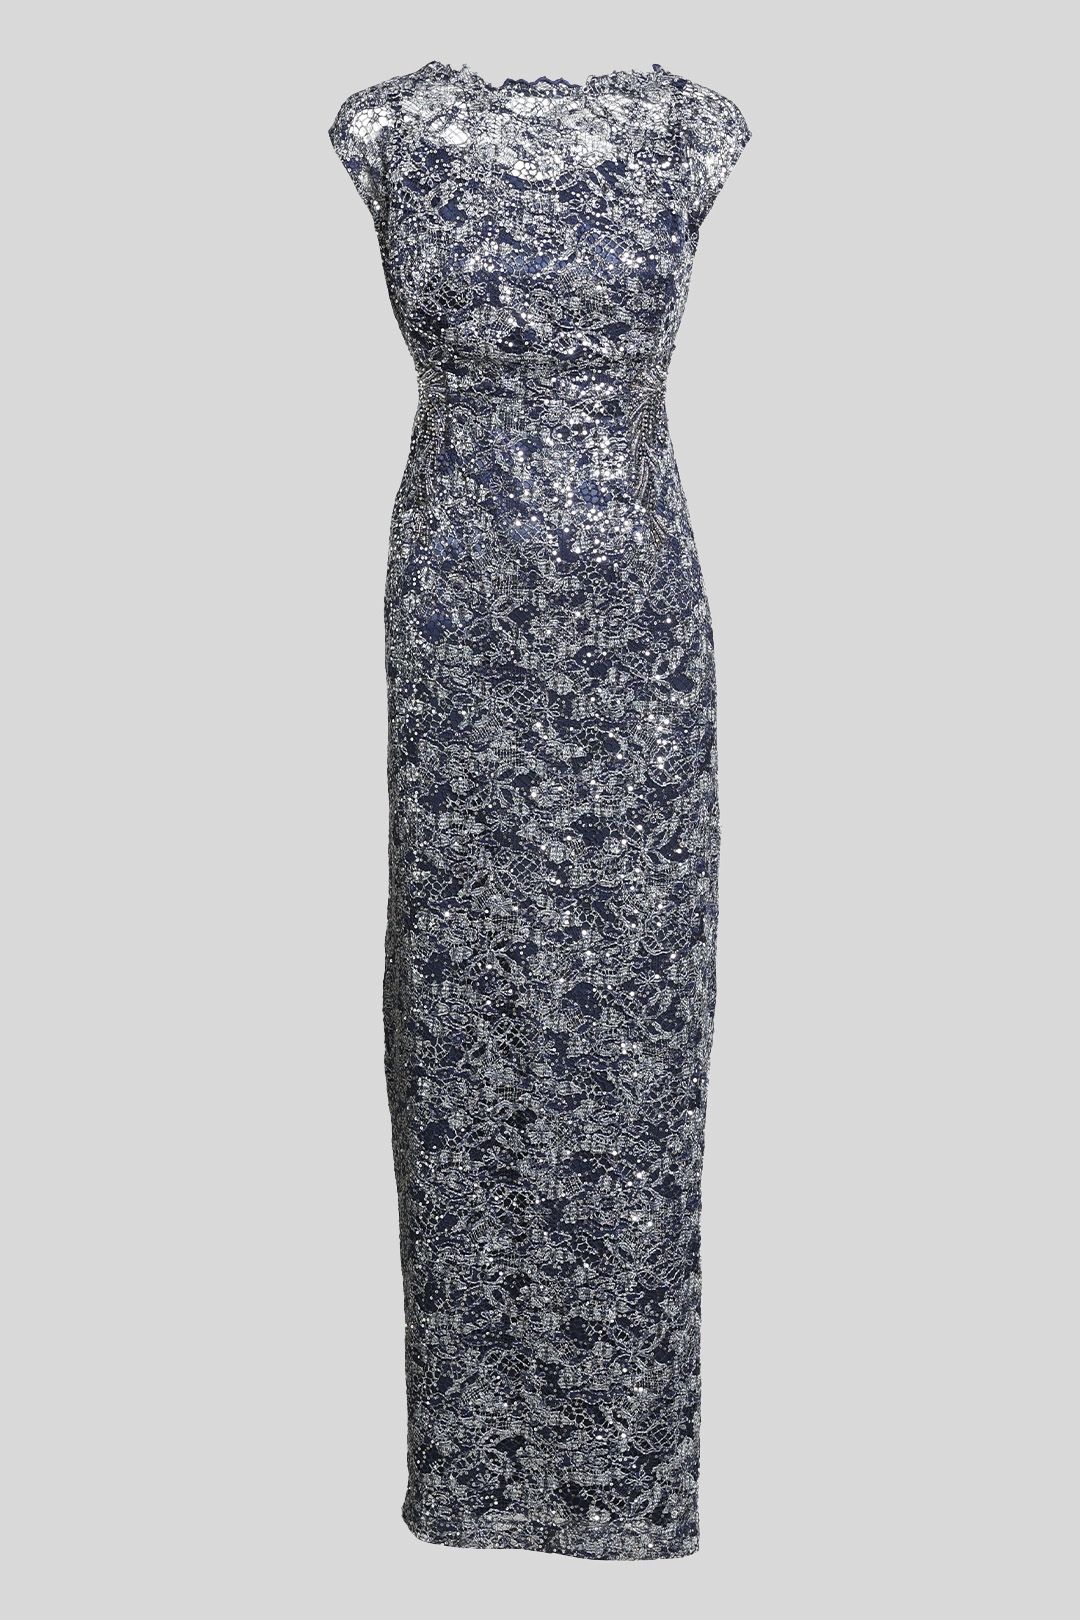 Sequin Dresses | Shop Sparkly Party & Glitter Dresses Online